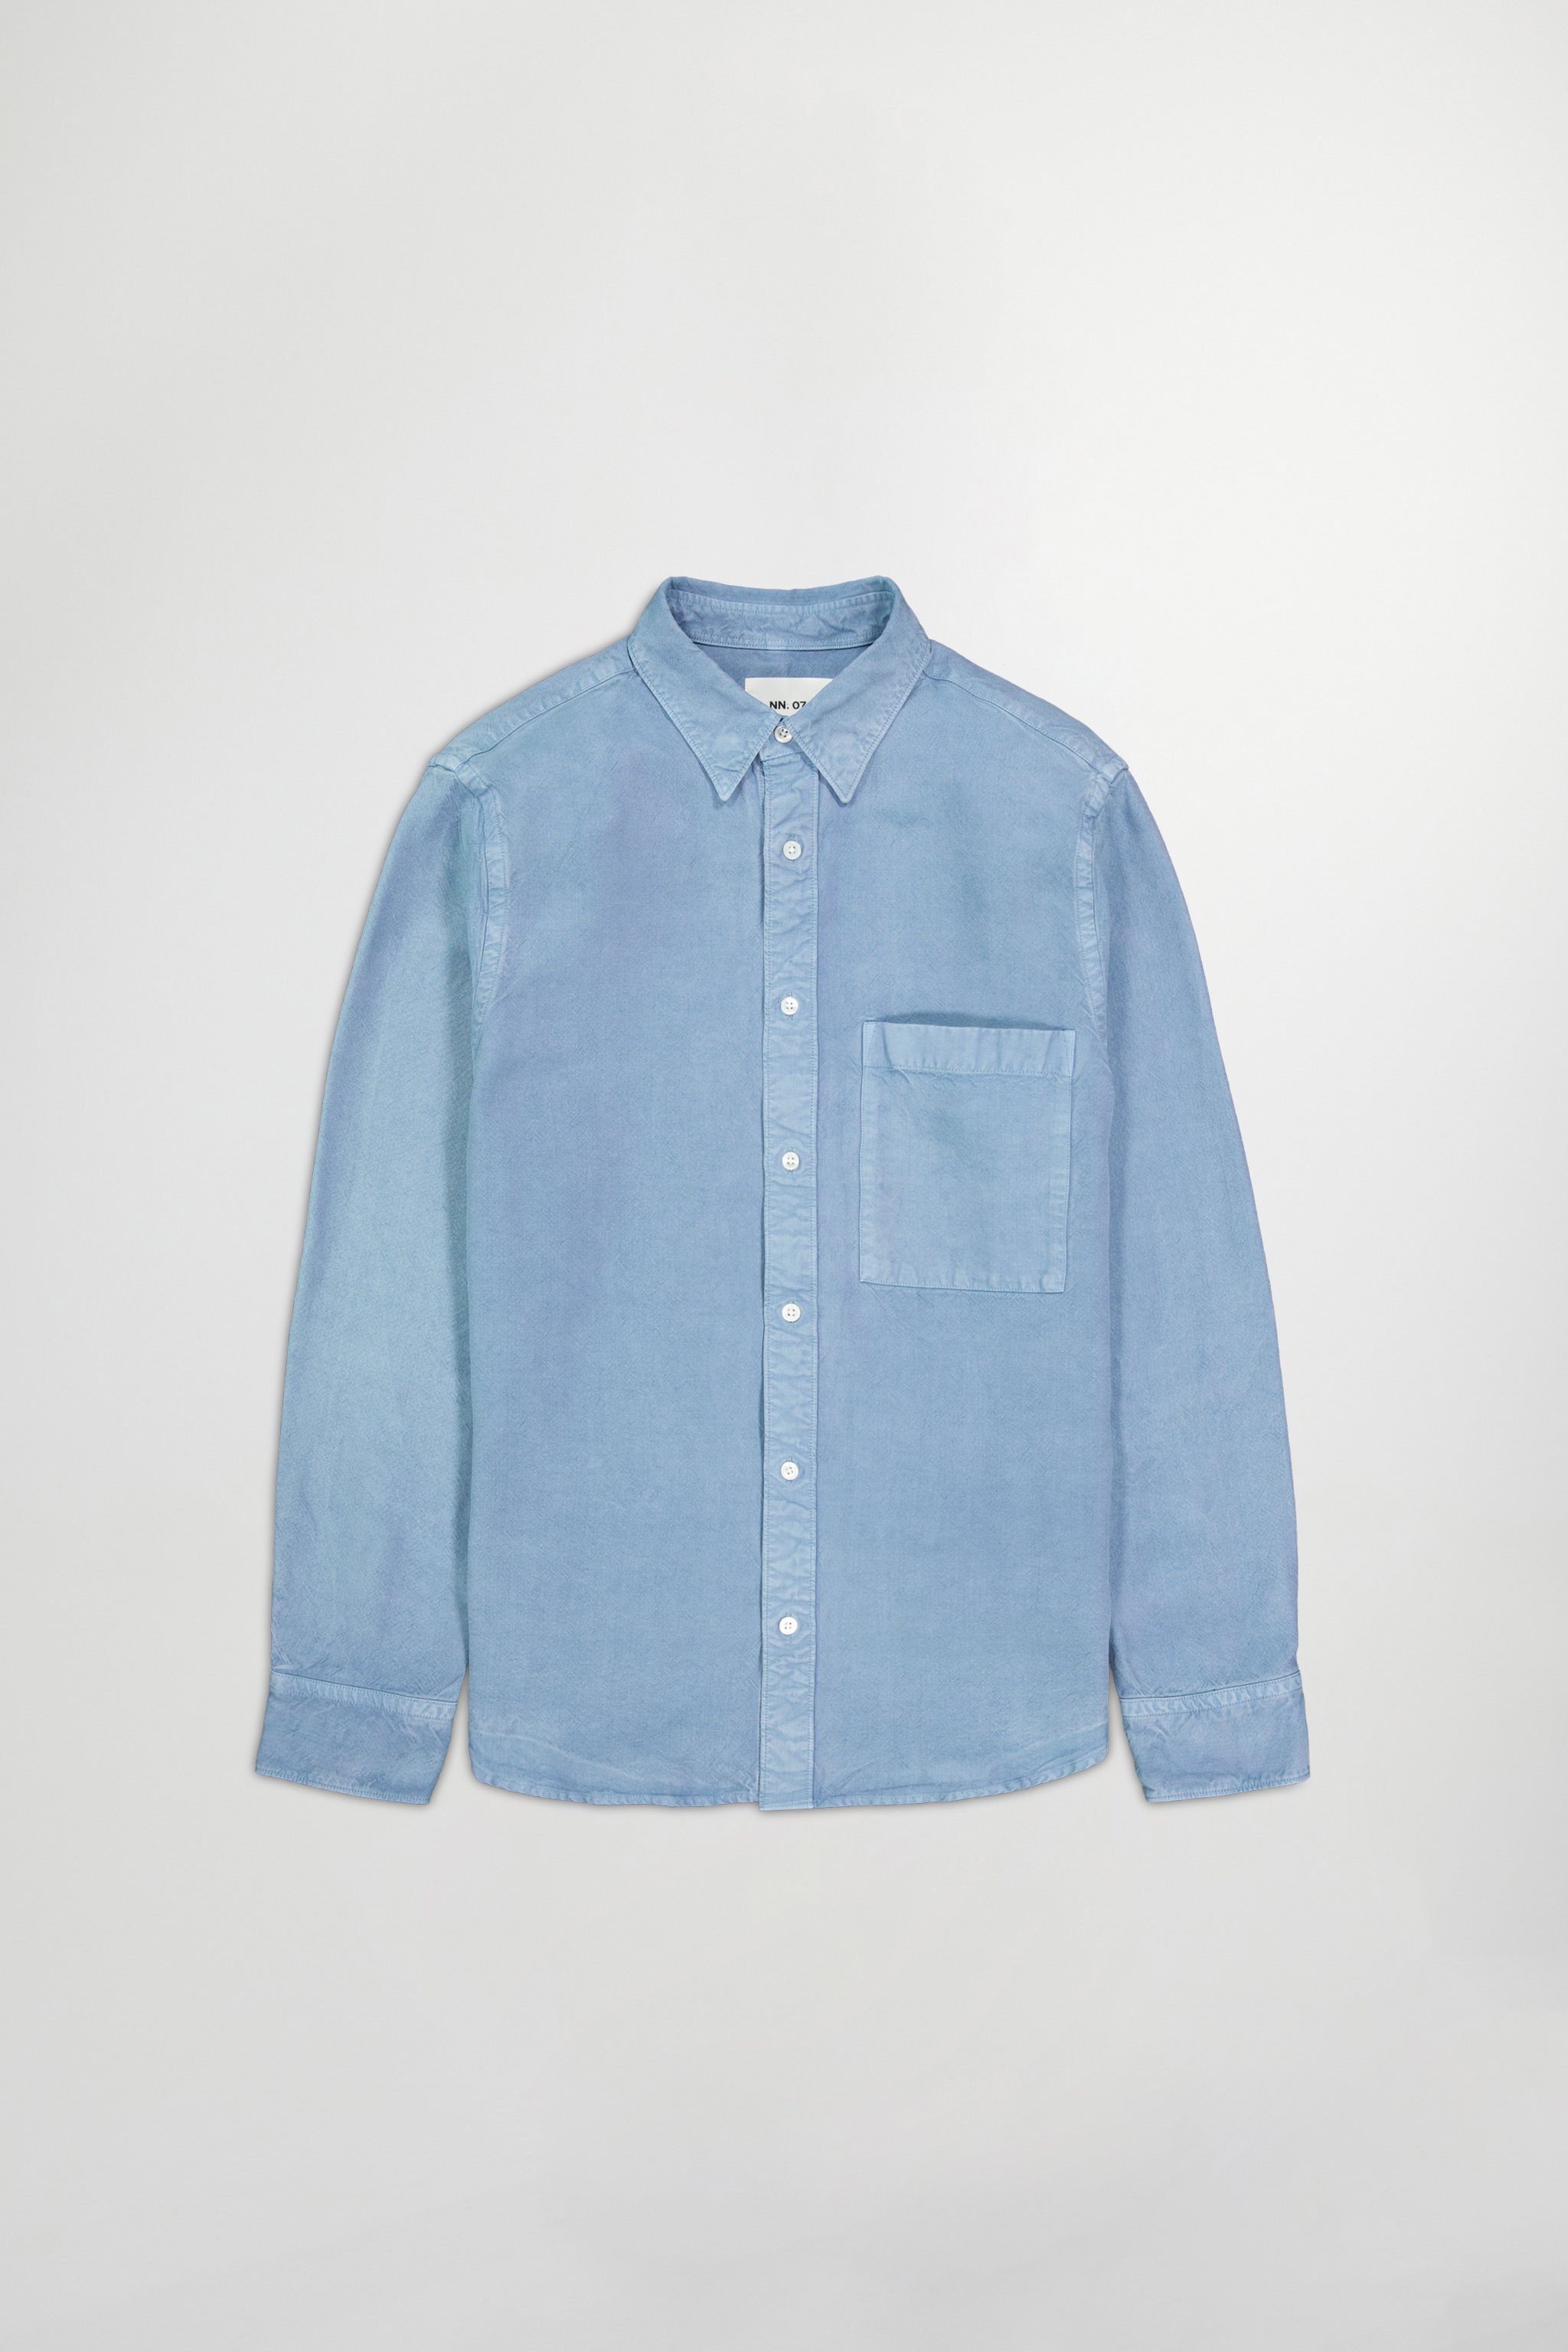 - 5213 at Buy shirt Blue men\'s - online Cohen